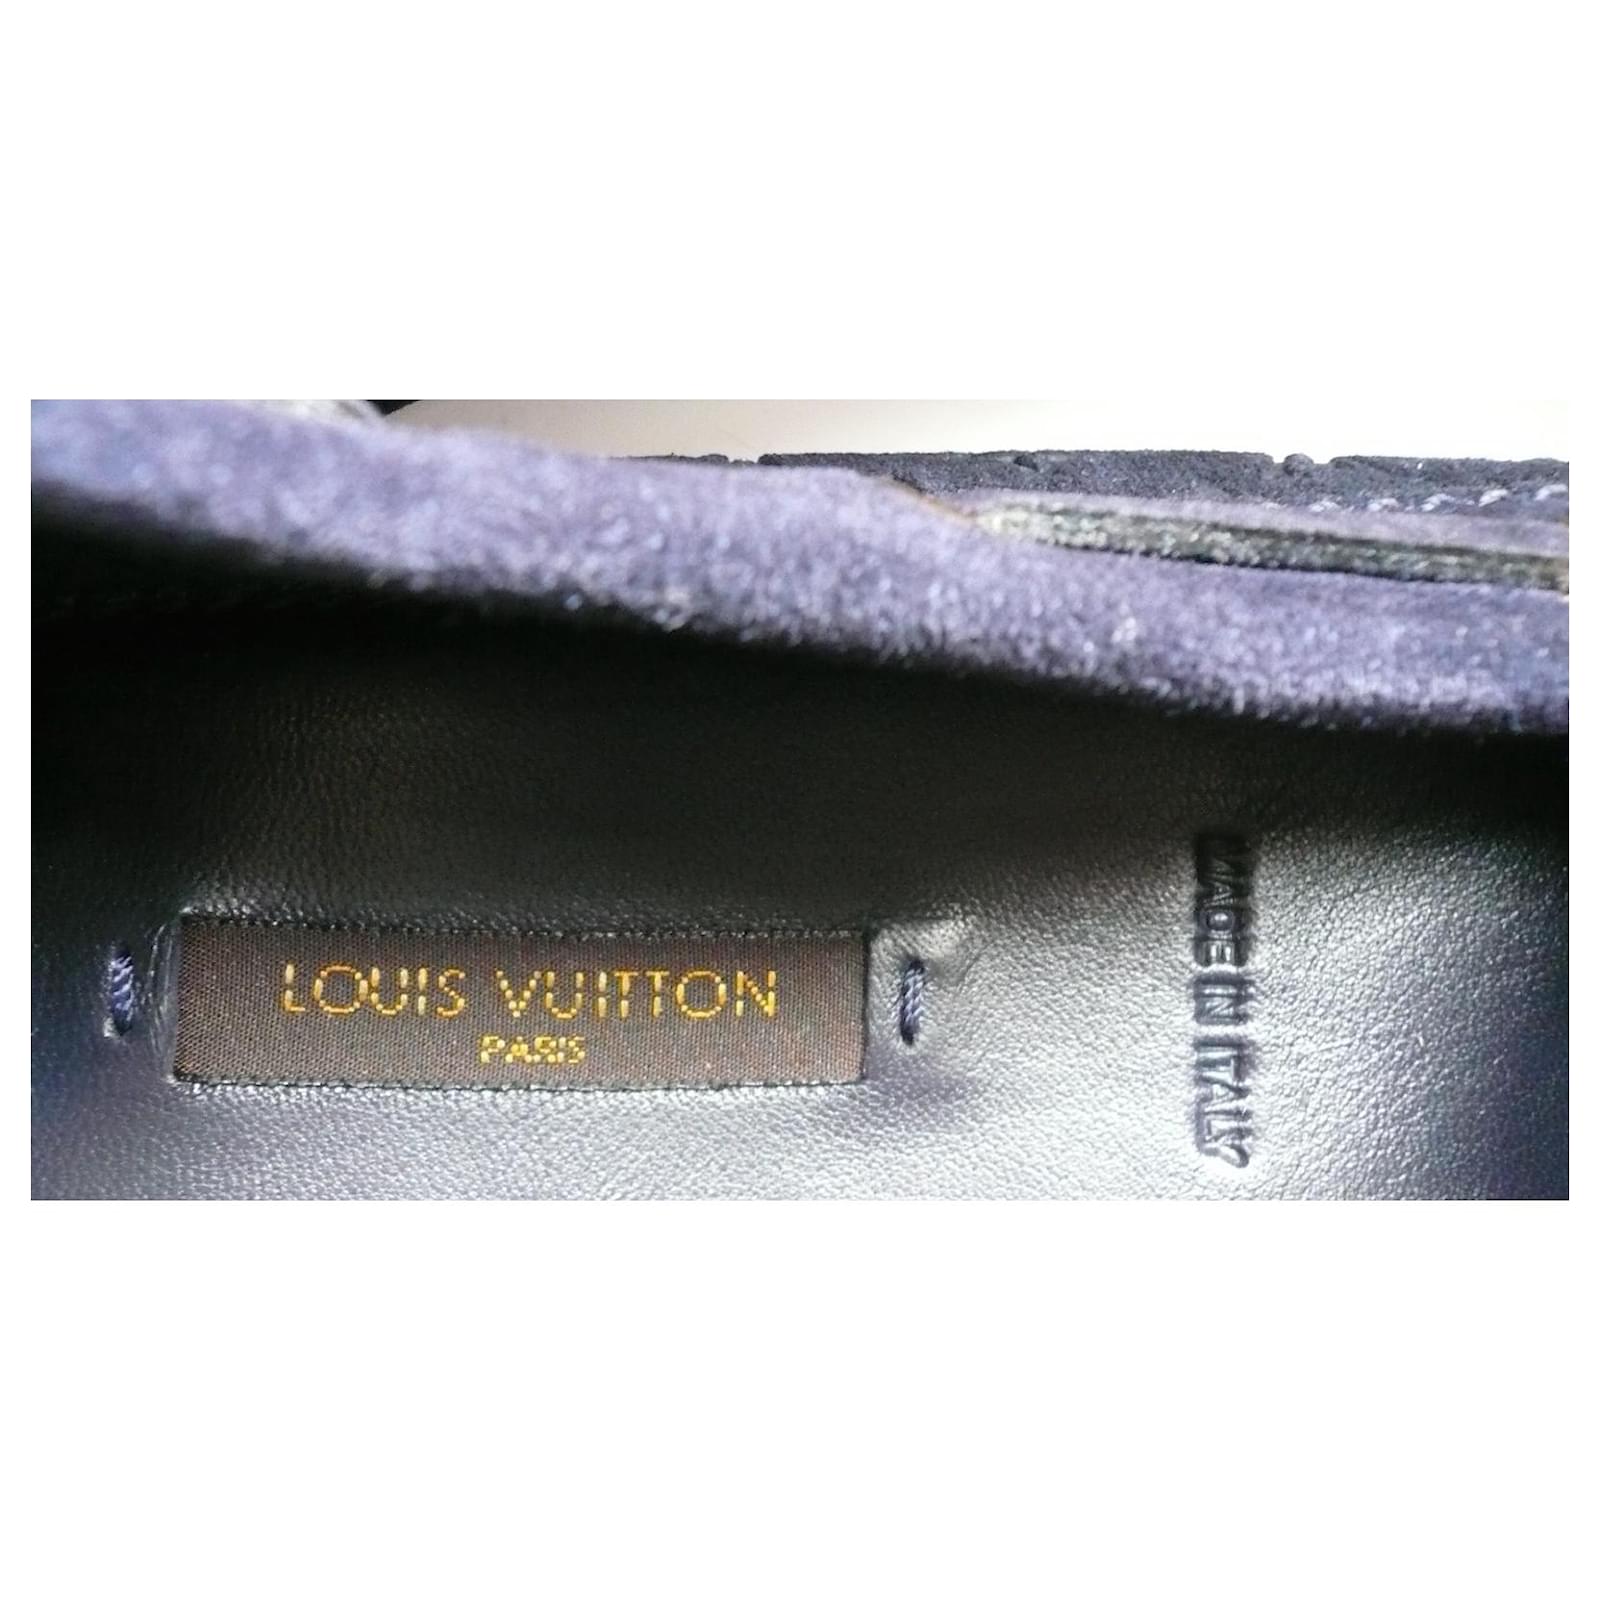 LOUIS VUITTON Navy suede studded loafers / GLORIA FLAT LOAFER T39 NEW IT  Navy blue Deerskin ref.705417 - Joli Closet